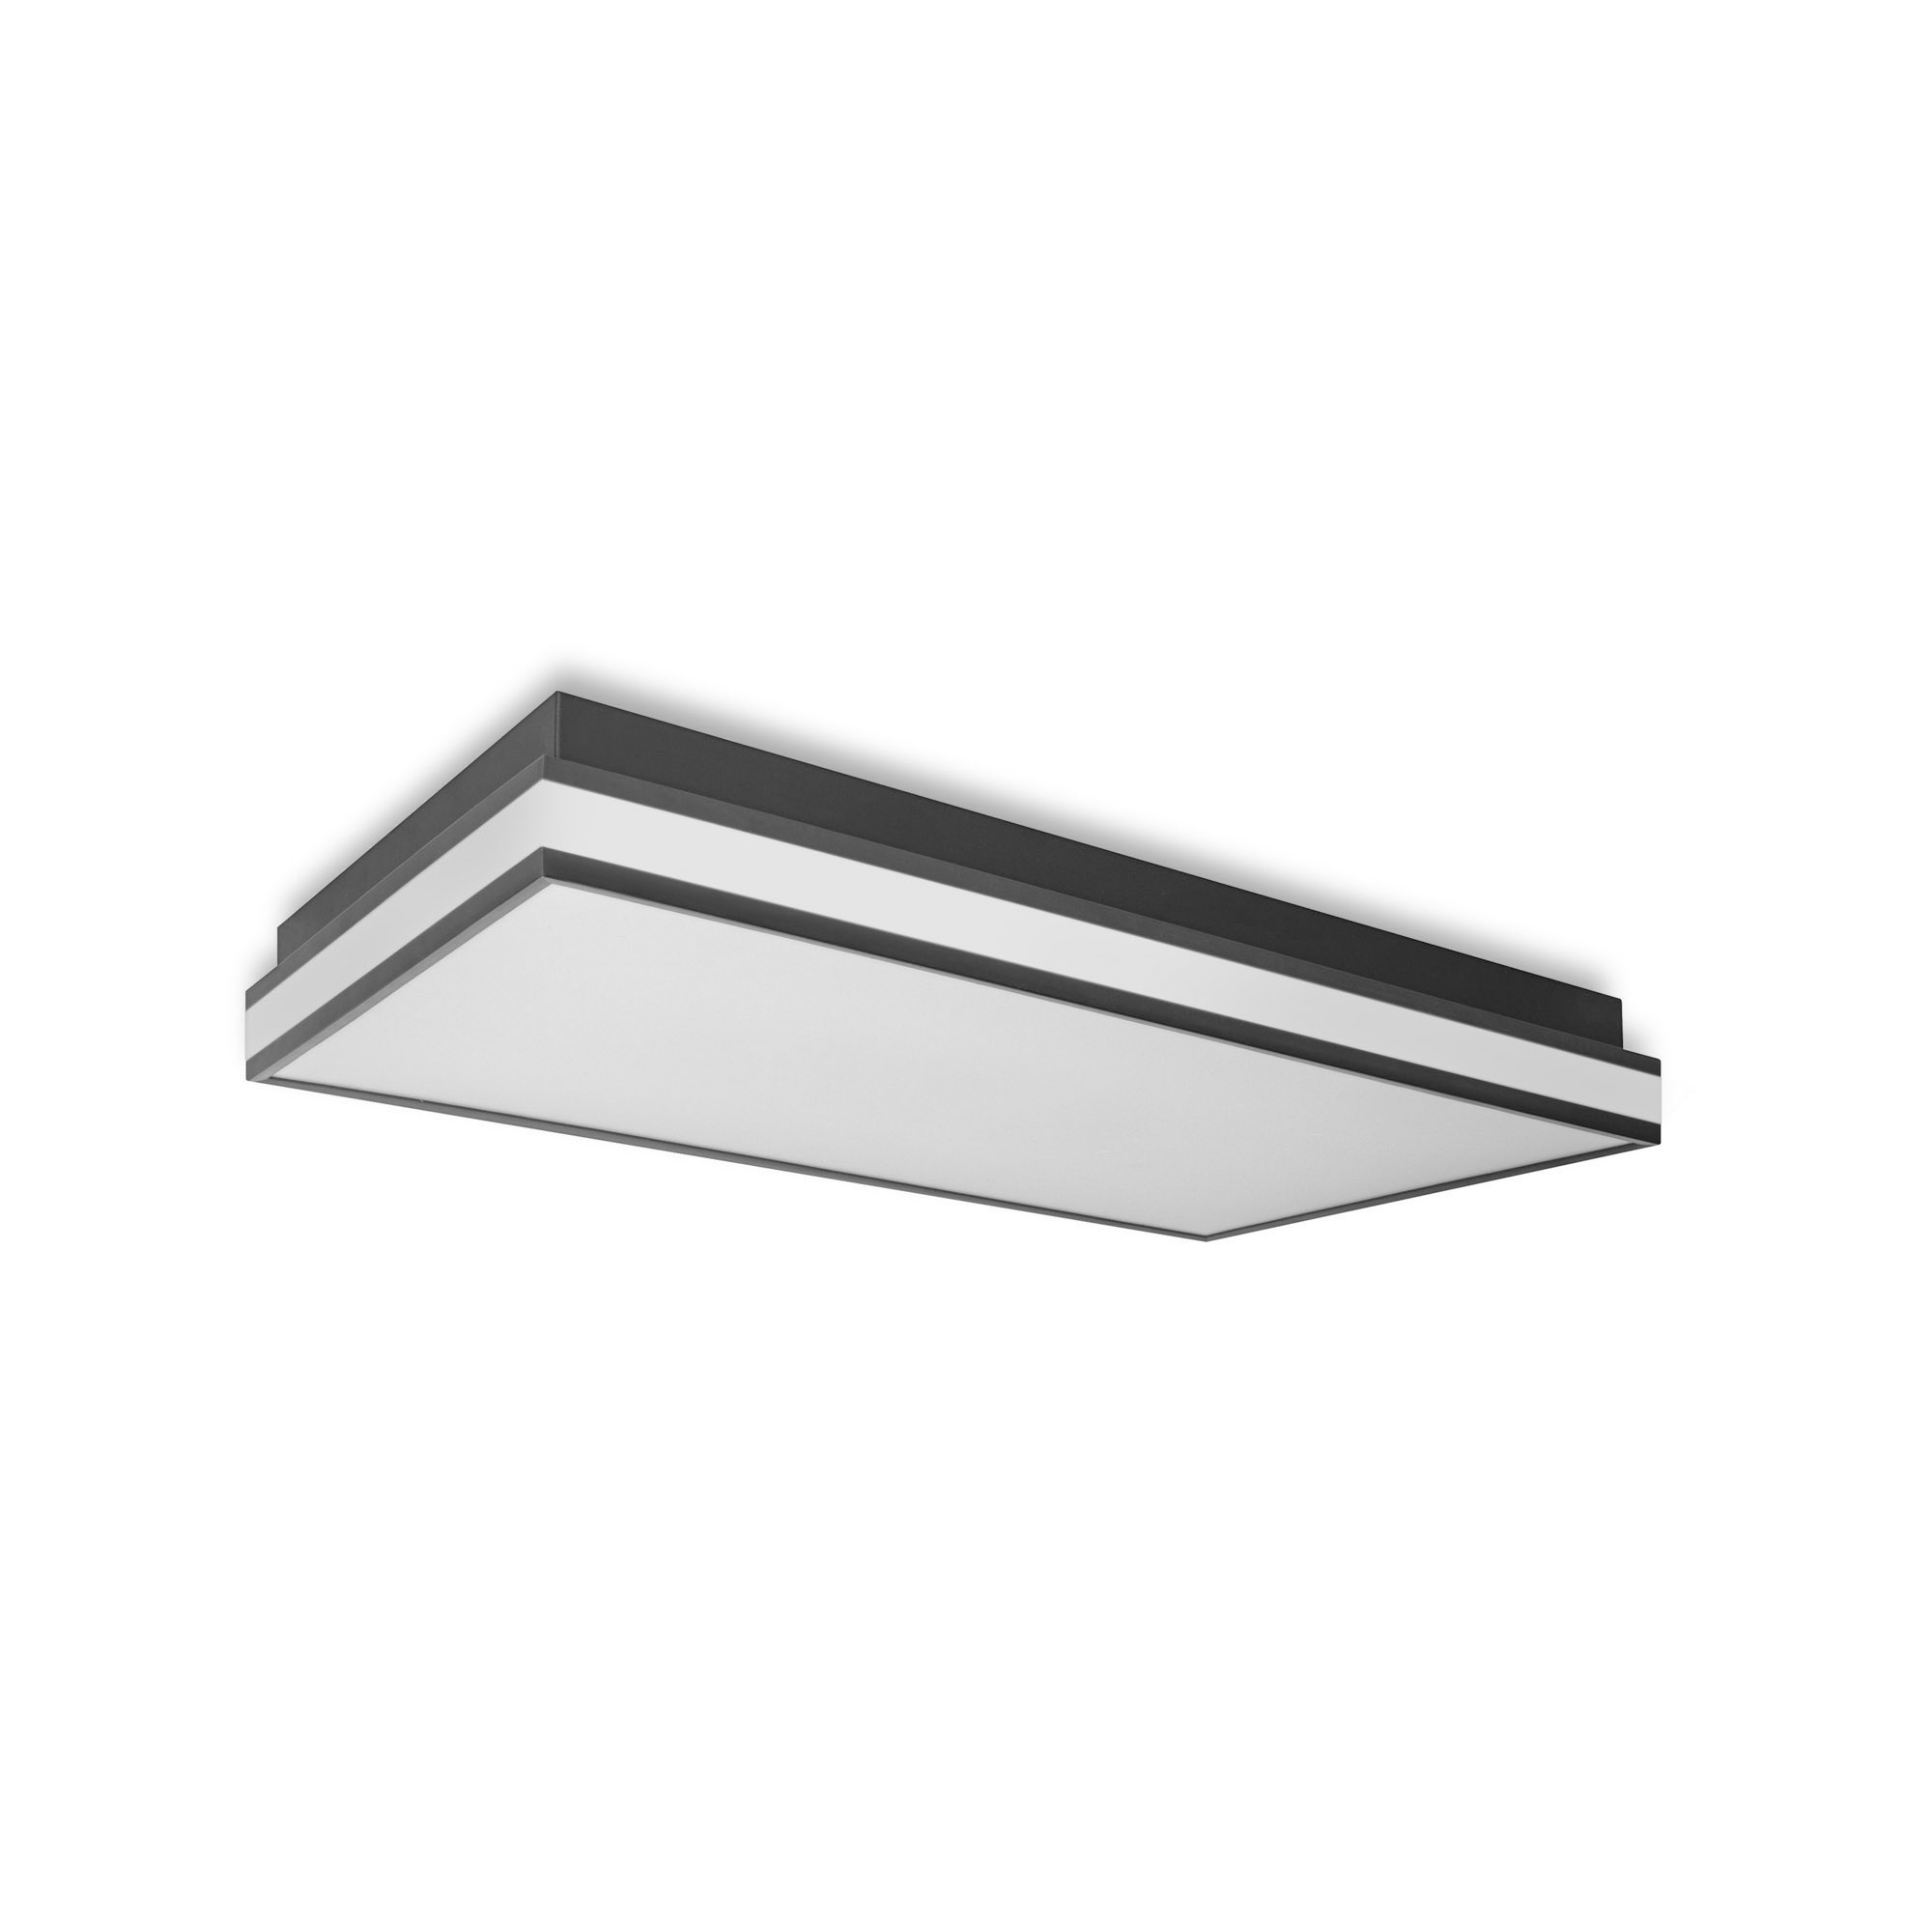 LEDVANCE SMART+ WiFi Tunable White LED Ceiling Light ORBIS MAGNET 600x300mm black 4200lm